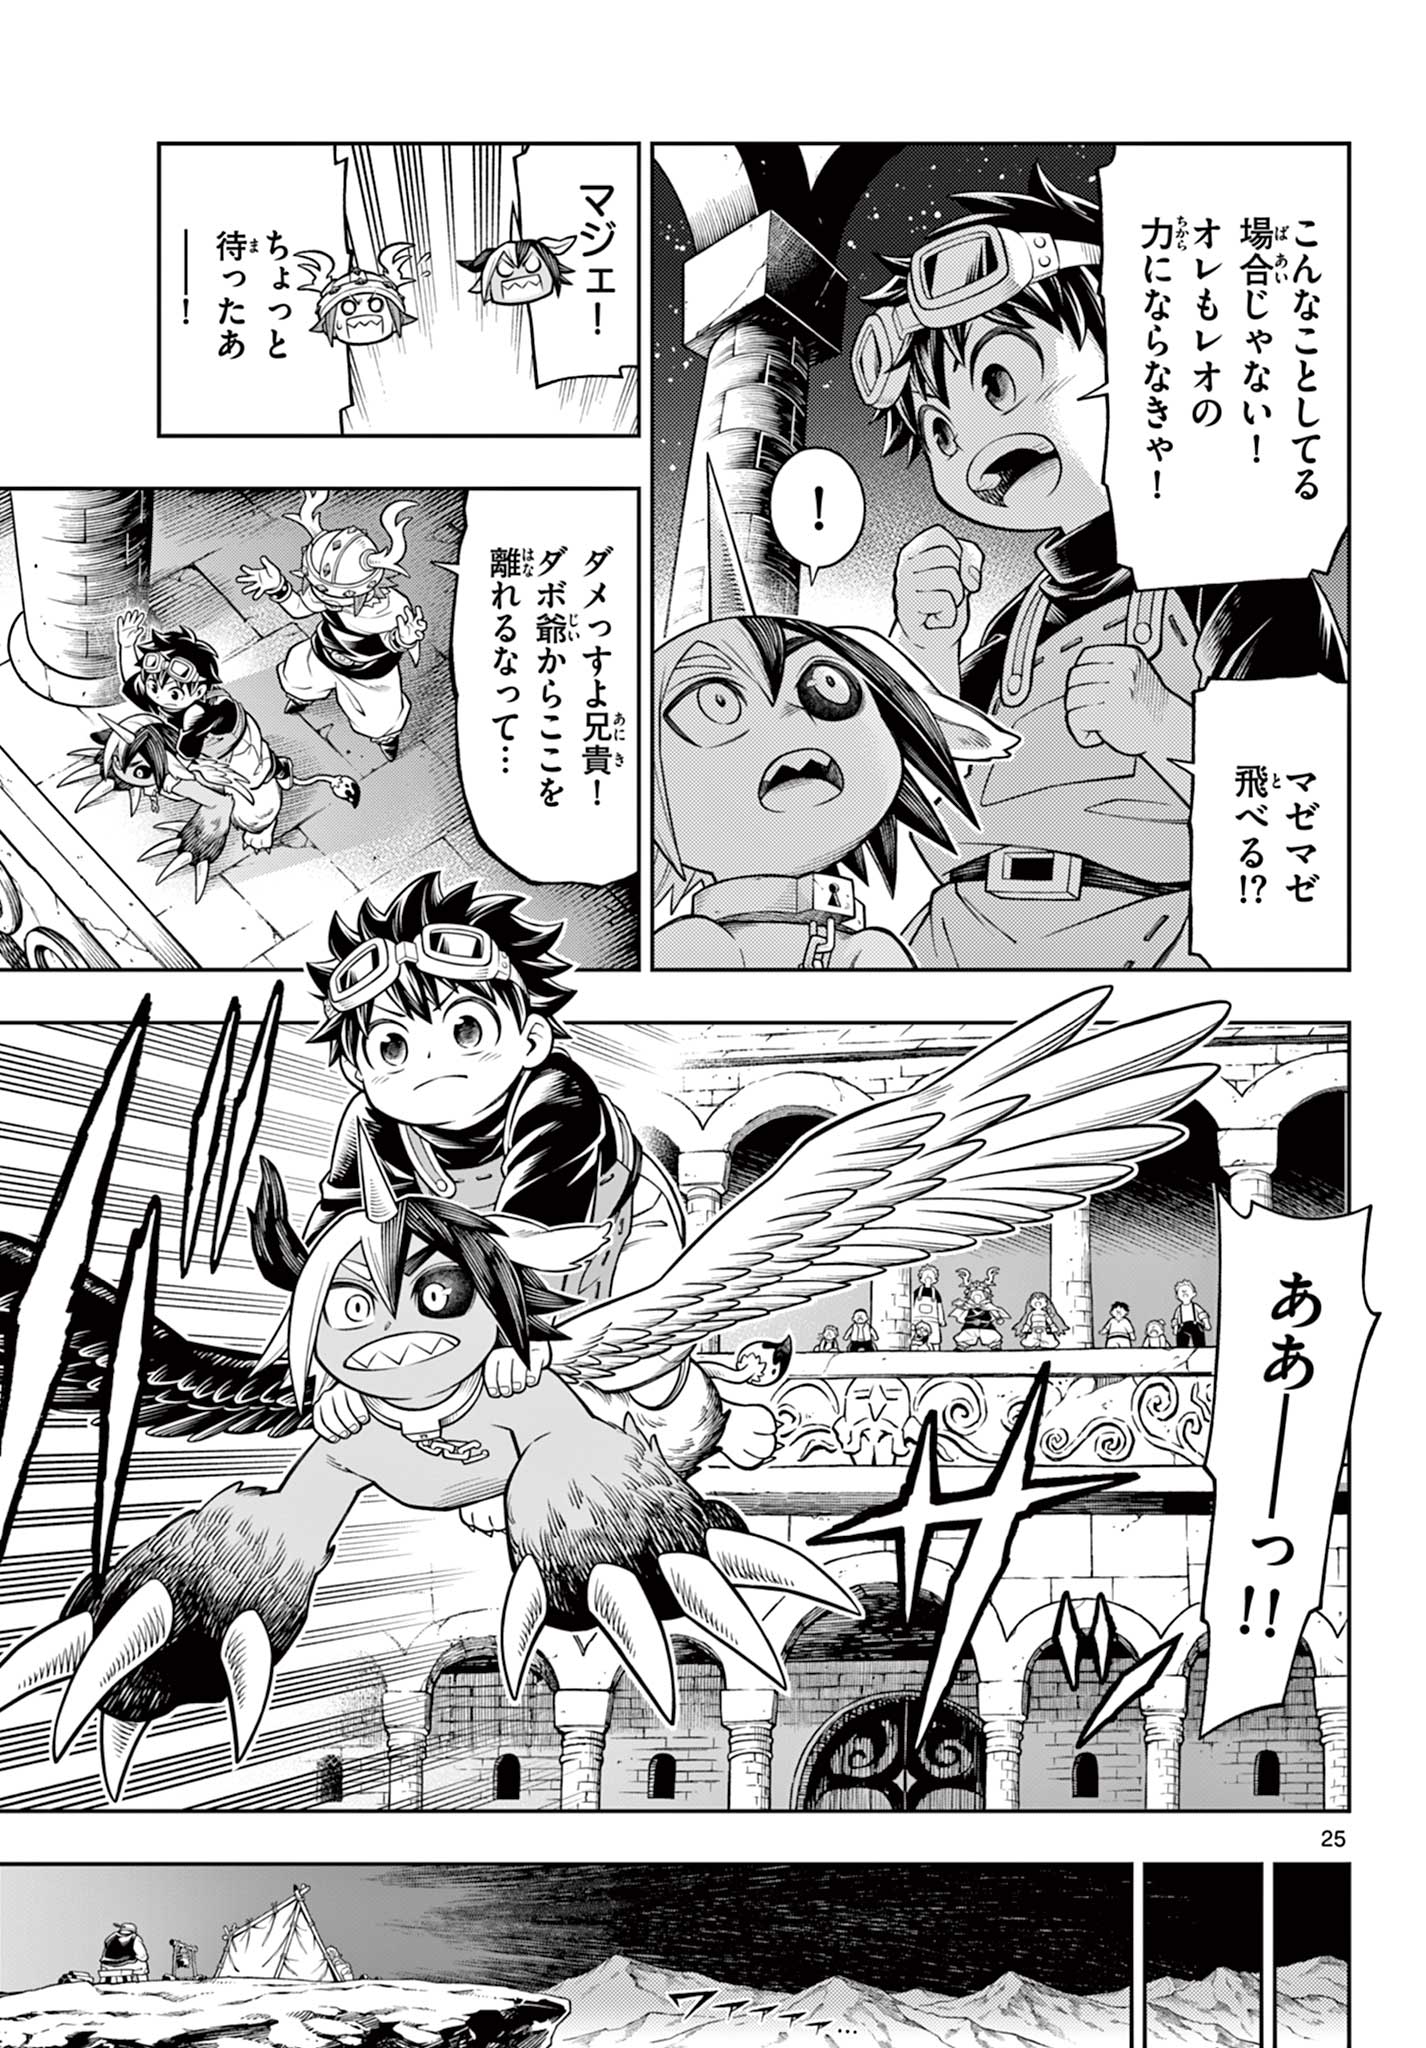 Soara to Mamono no ie - Chapter 28 - Page 25